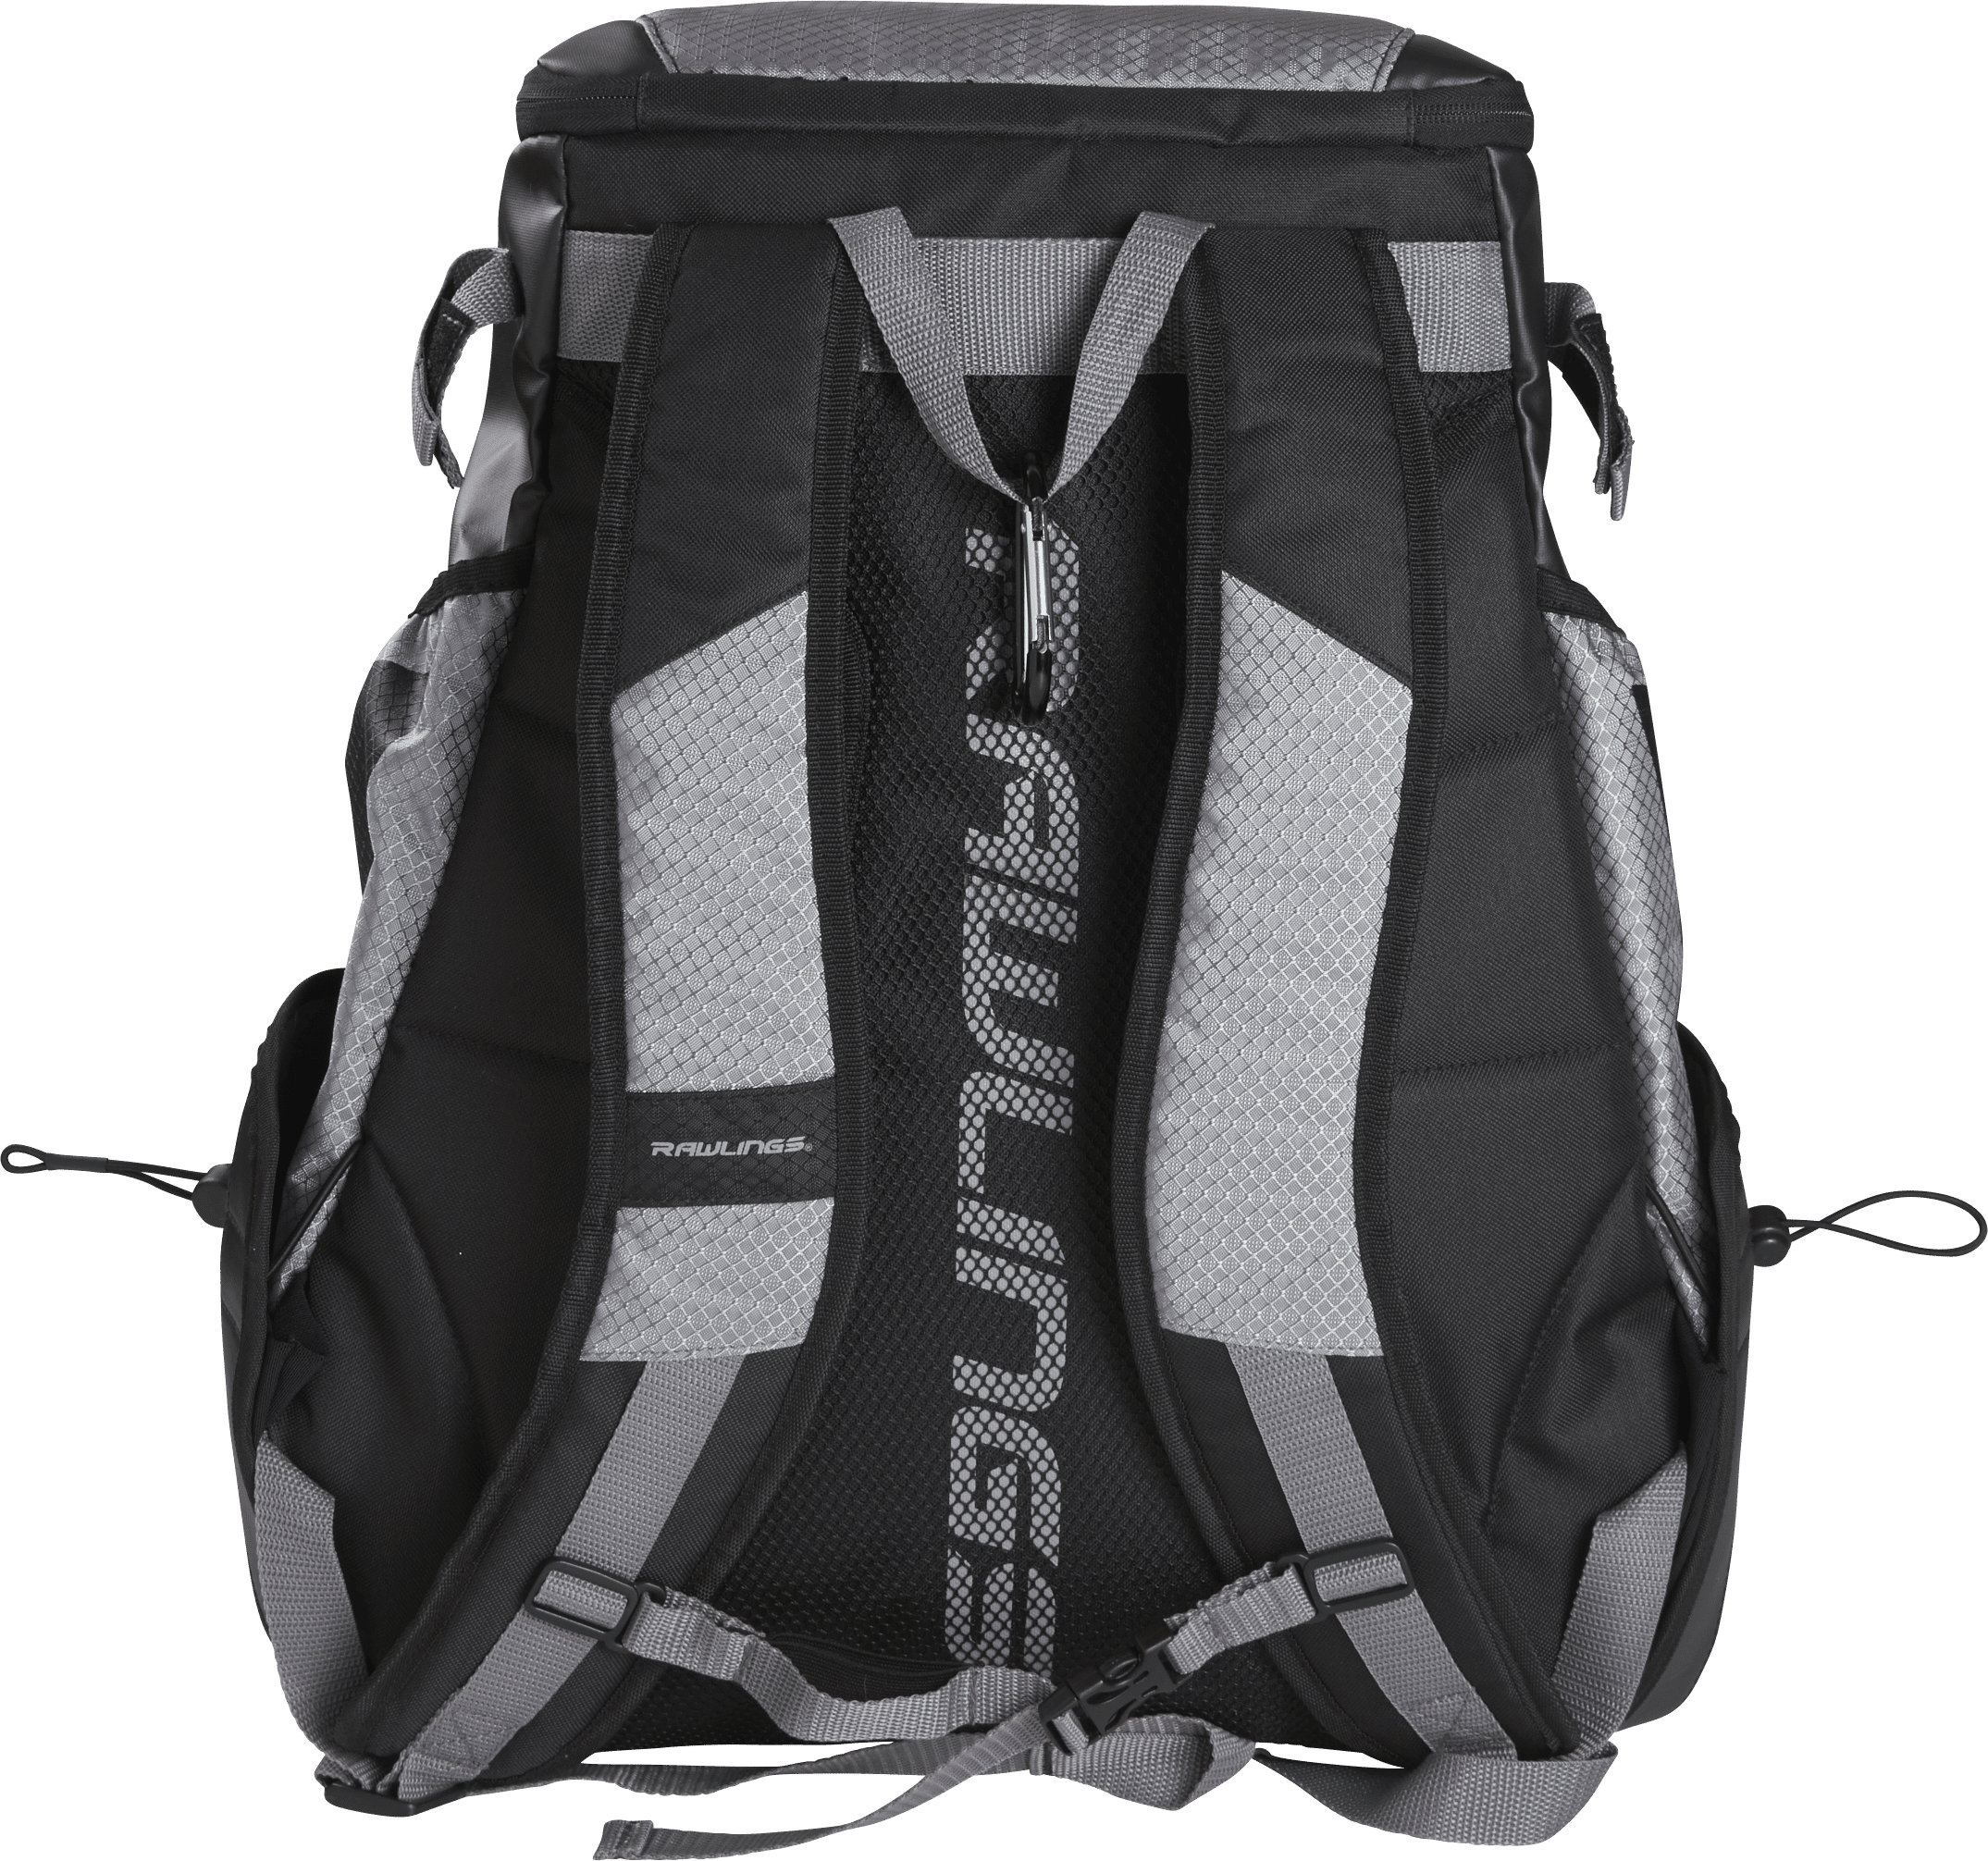 Rawlings R1000 Gold Glove Series Baseball Equipment Backpack, Gray